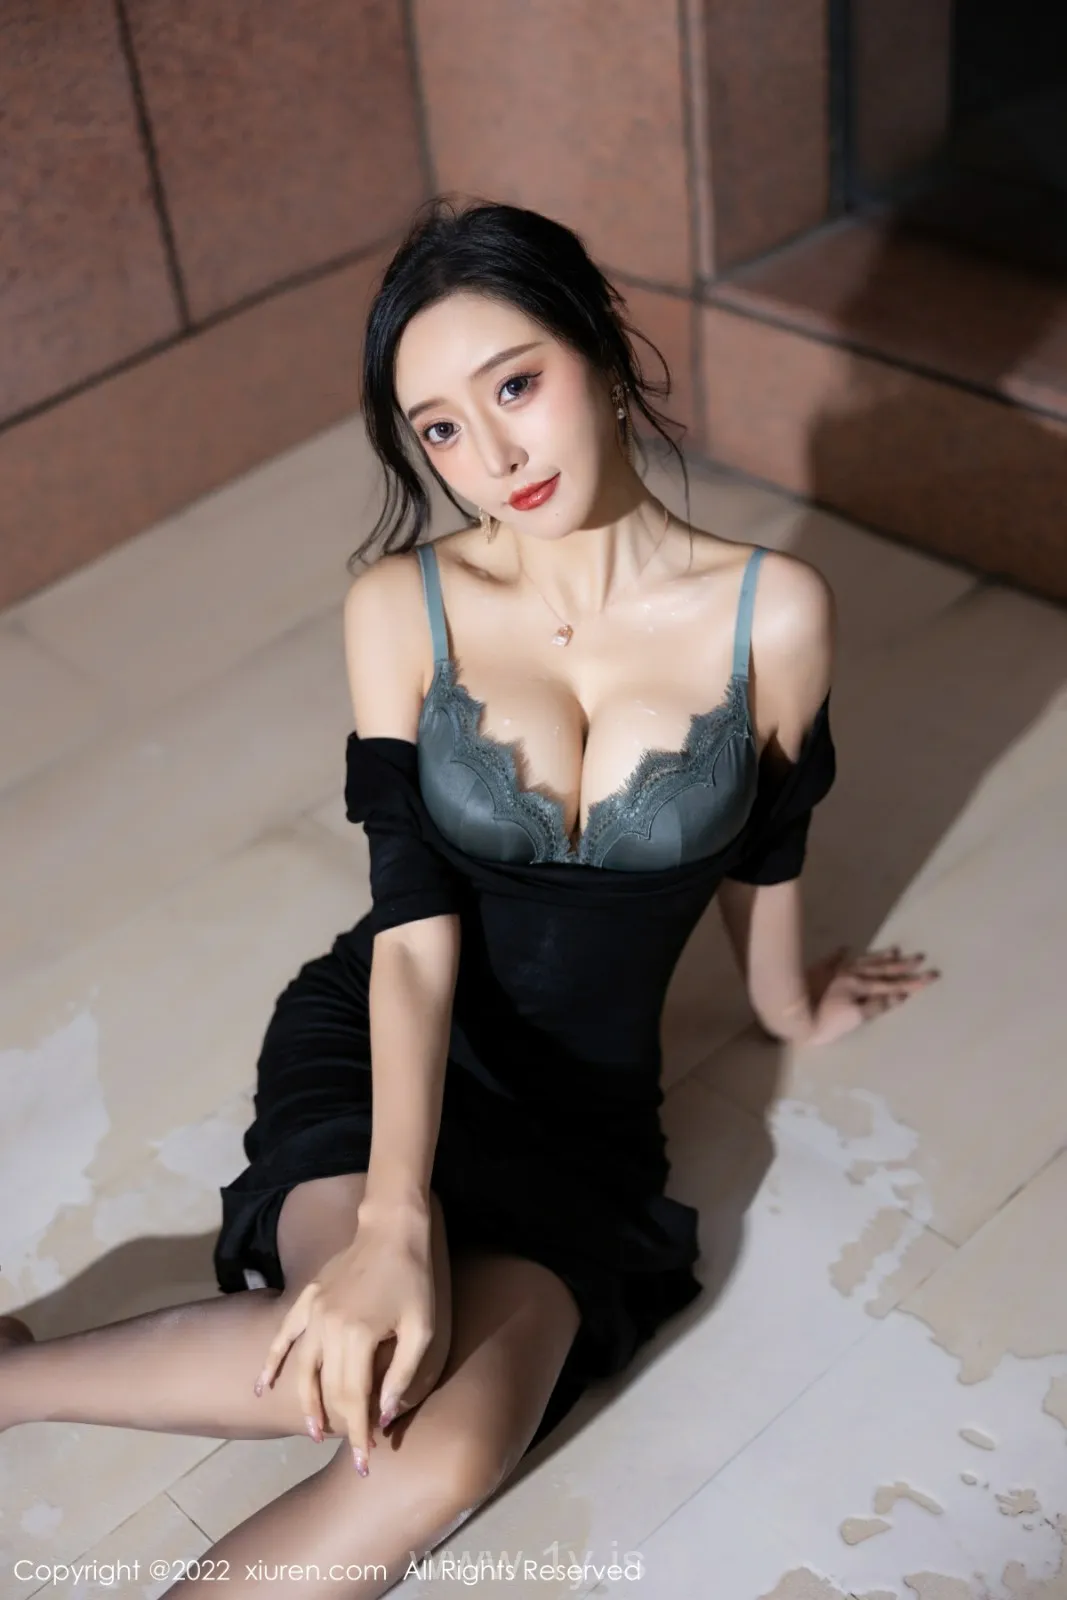 XIUREN(秀人网) NO.5187 Stylish & Decent Asian Cougar 王馨瑶yanni